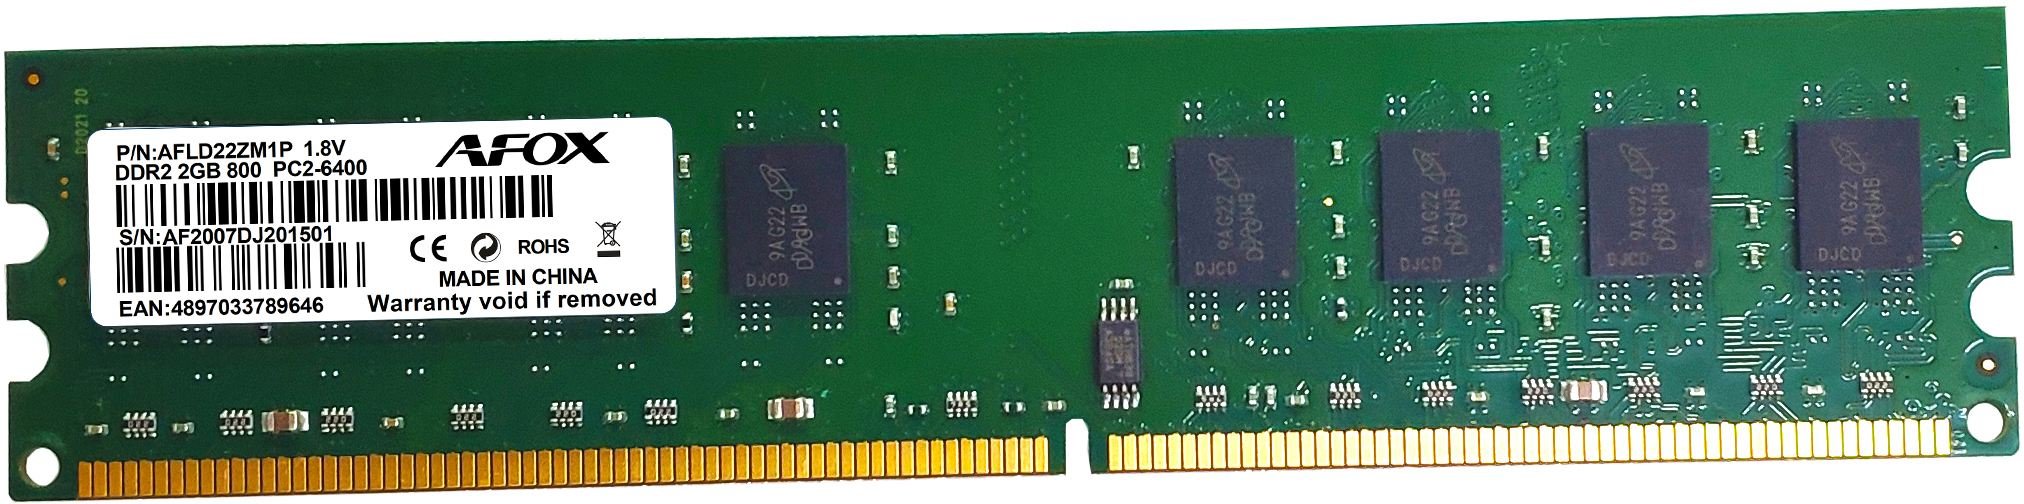 AFOX AFLD22ZM1P 2GB 800Mhz DDR2 MICRON CHIPSET RAM